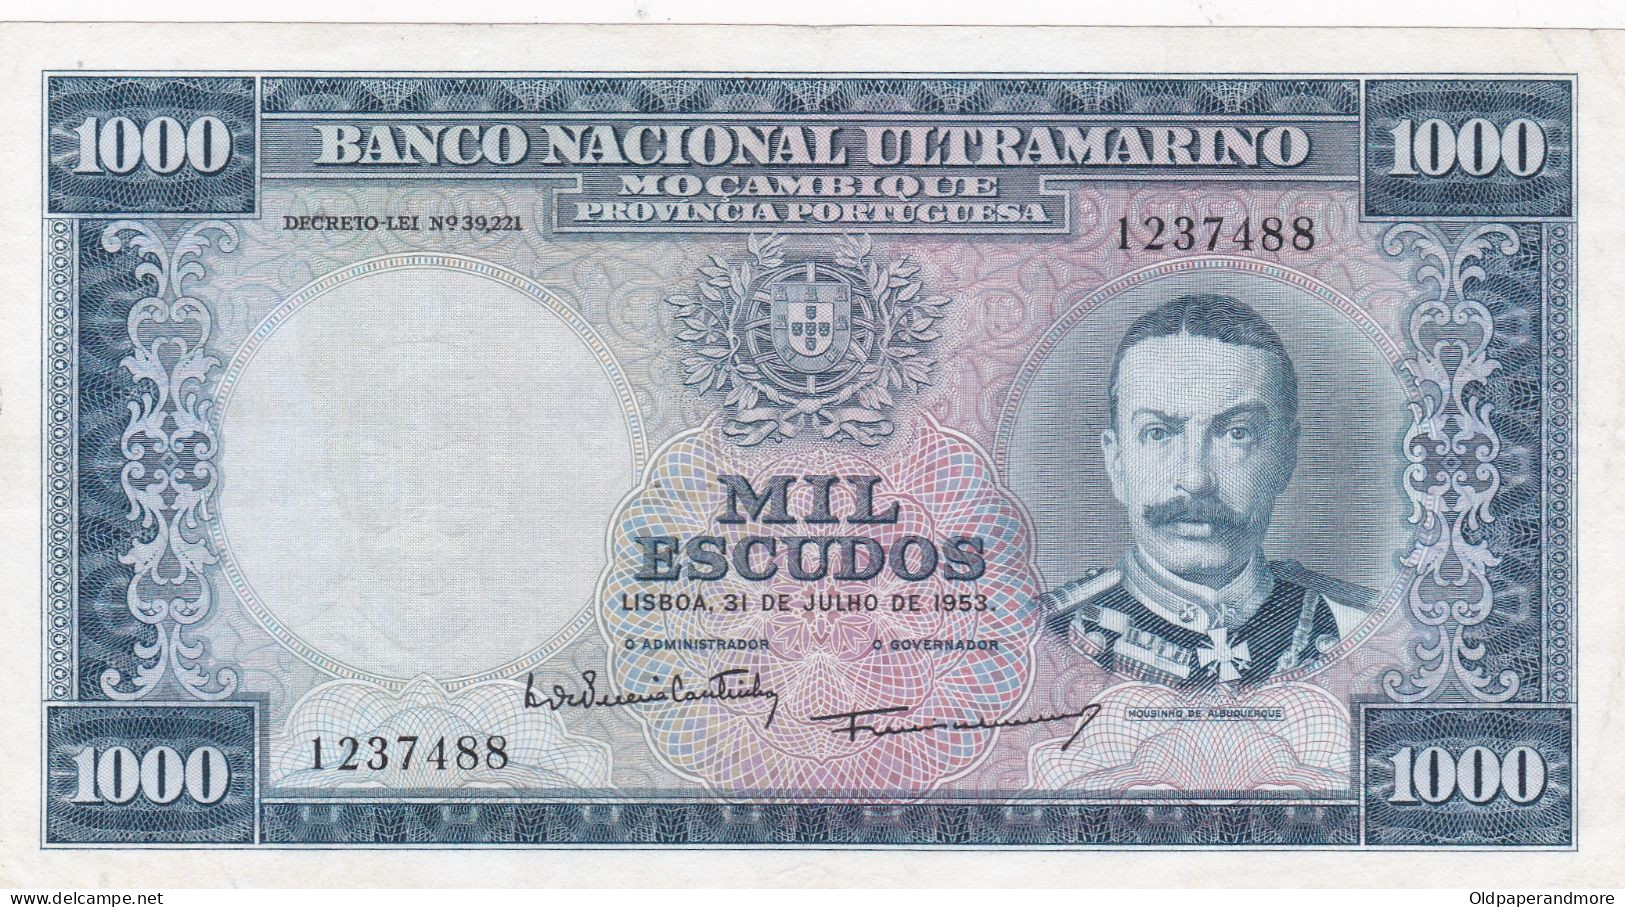 PORTUGAL MOÇAMBIQUE - MOZAMBIQUE - BANK NOTE - BANKNOTE - 1000$00  - 31/07/1953 - Portugal